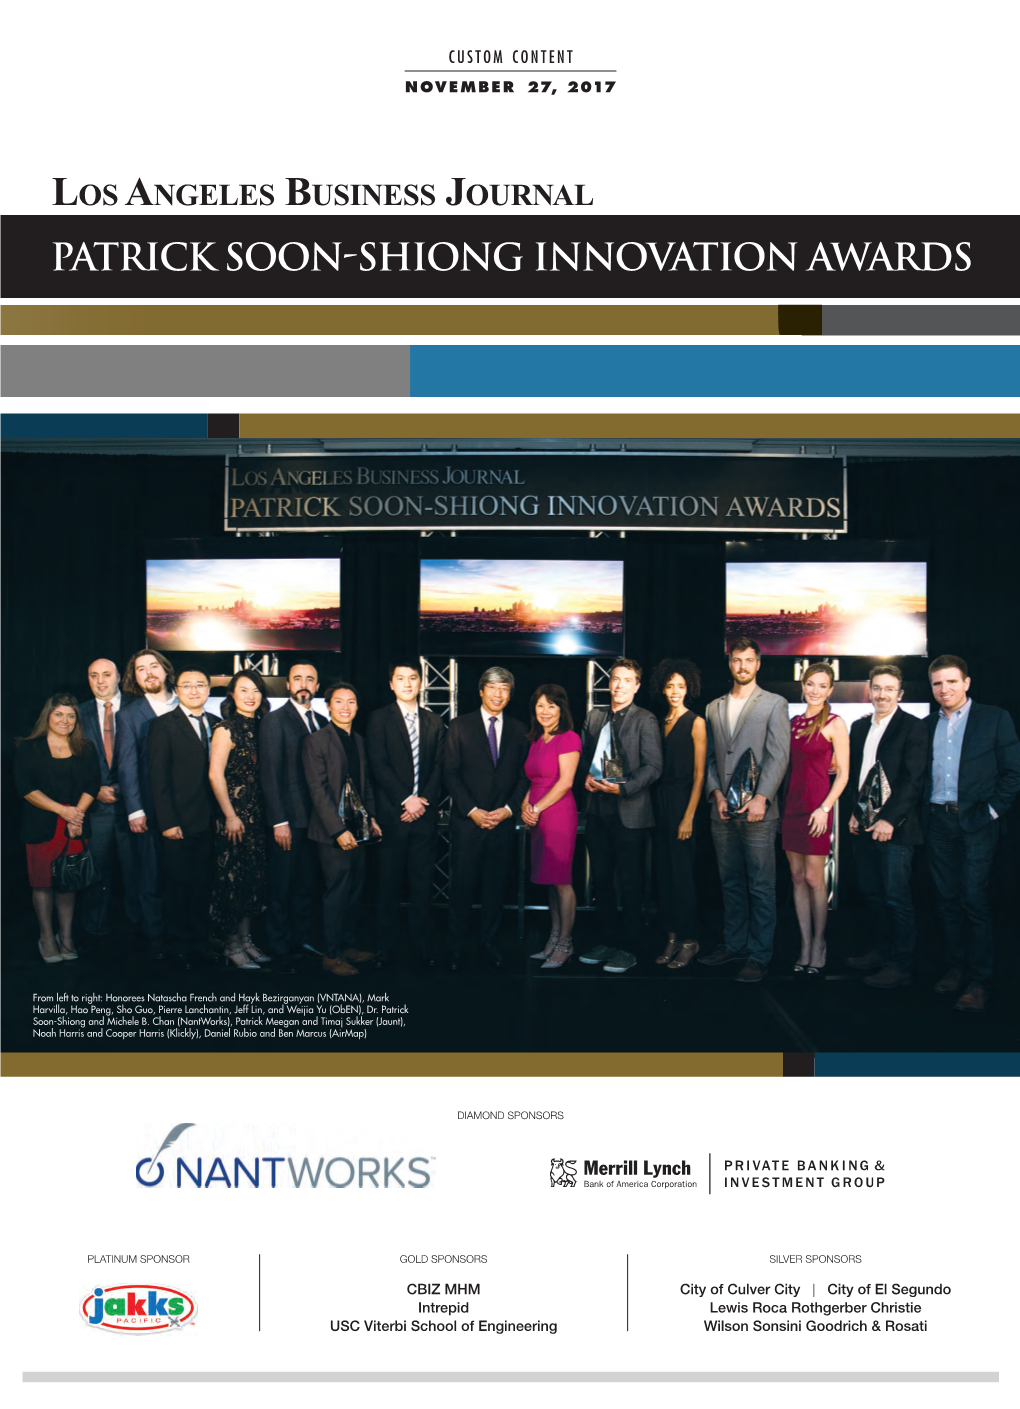 Patrick Soon-Shiong Innovation Awards